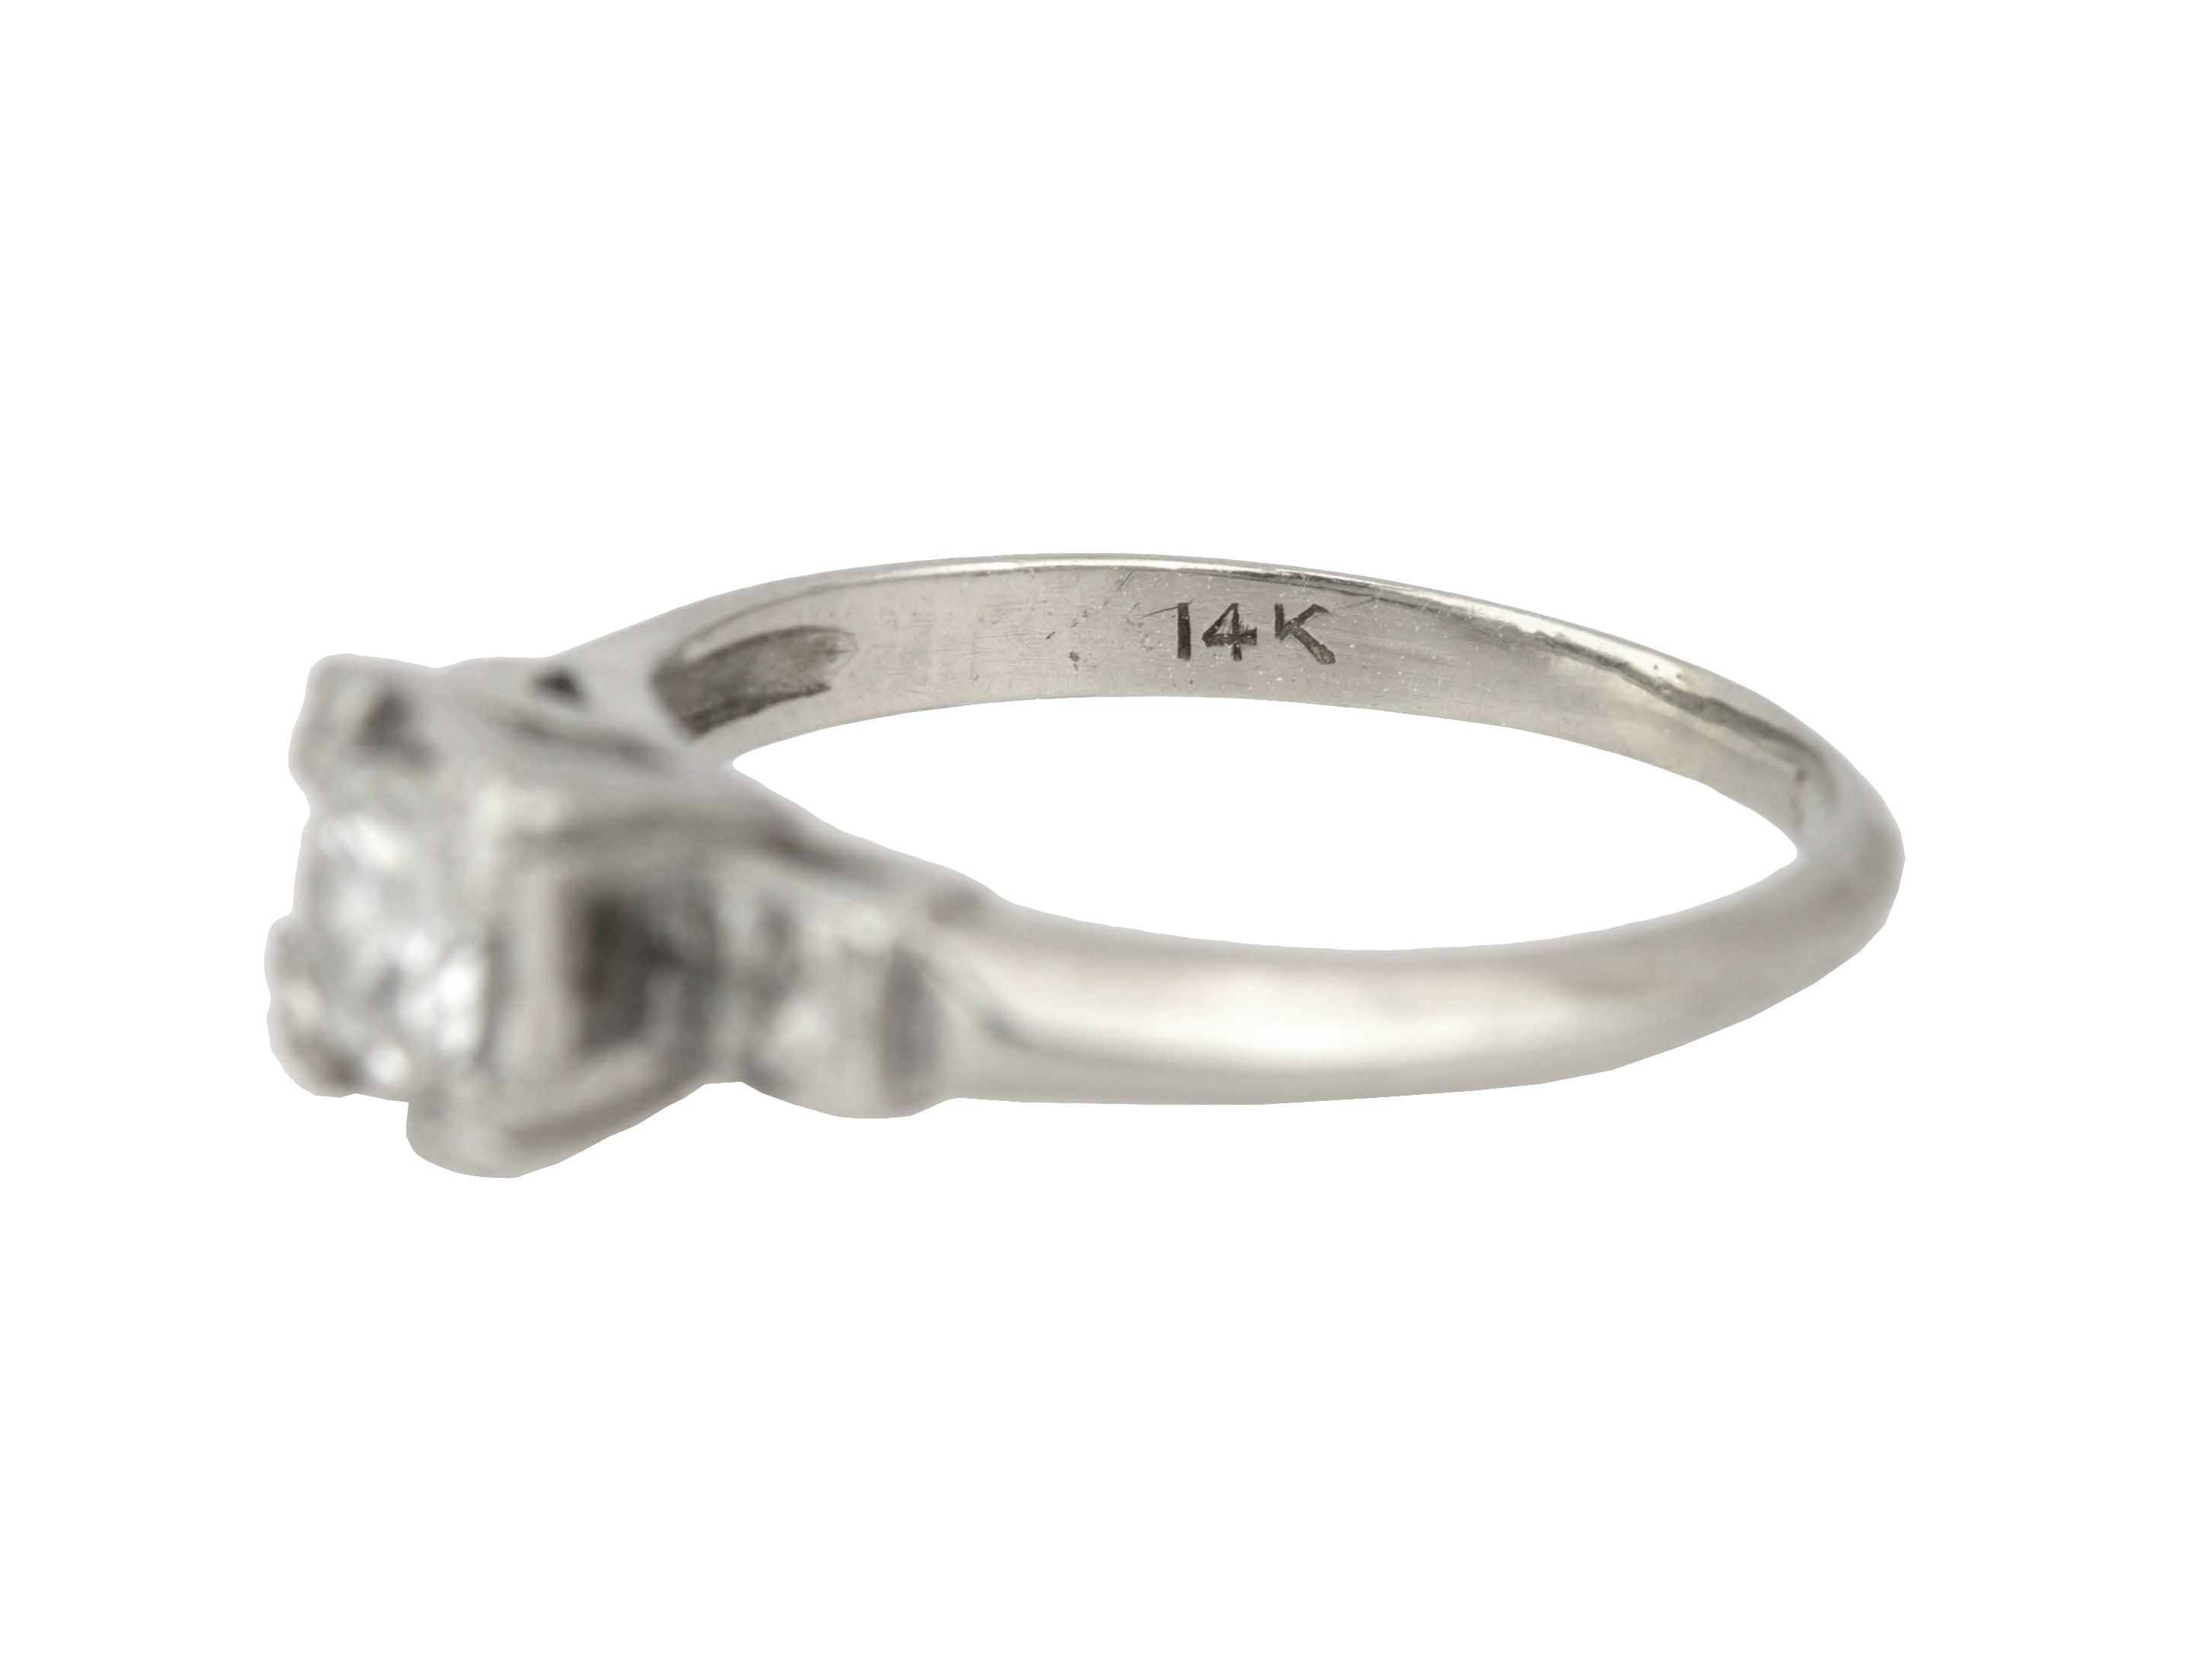 1940's Antique Art Deco 14K White Gold 0.33ct Solitaire Diamond Engagement Ring